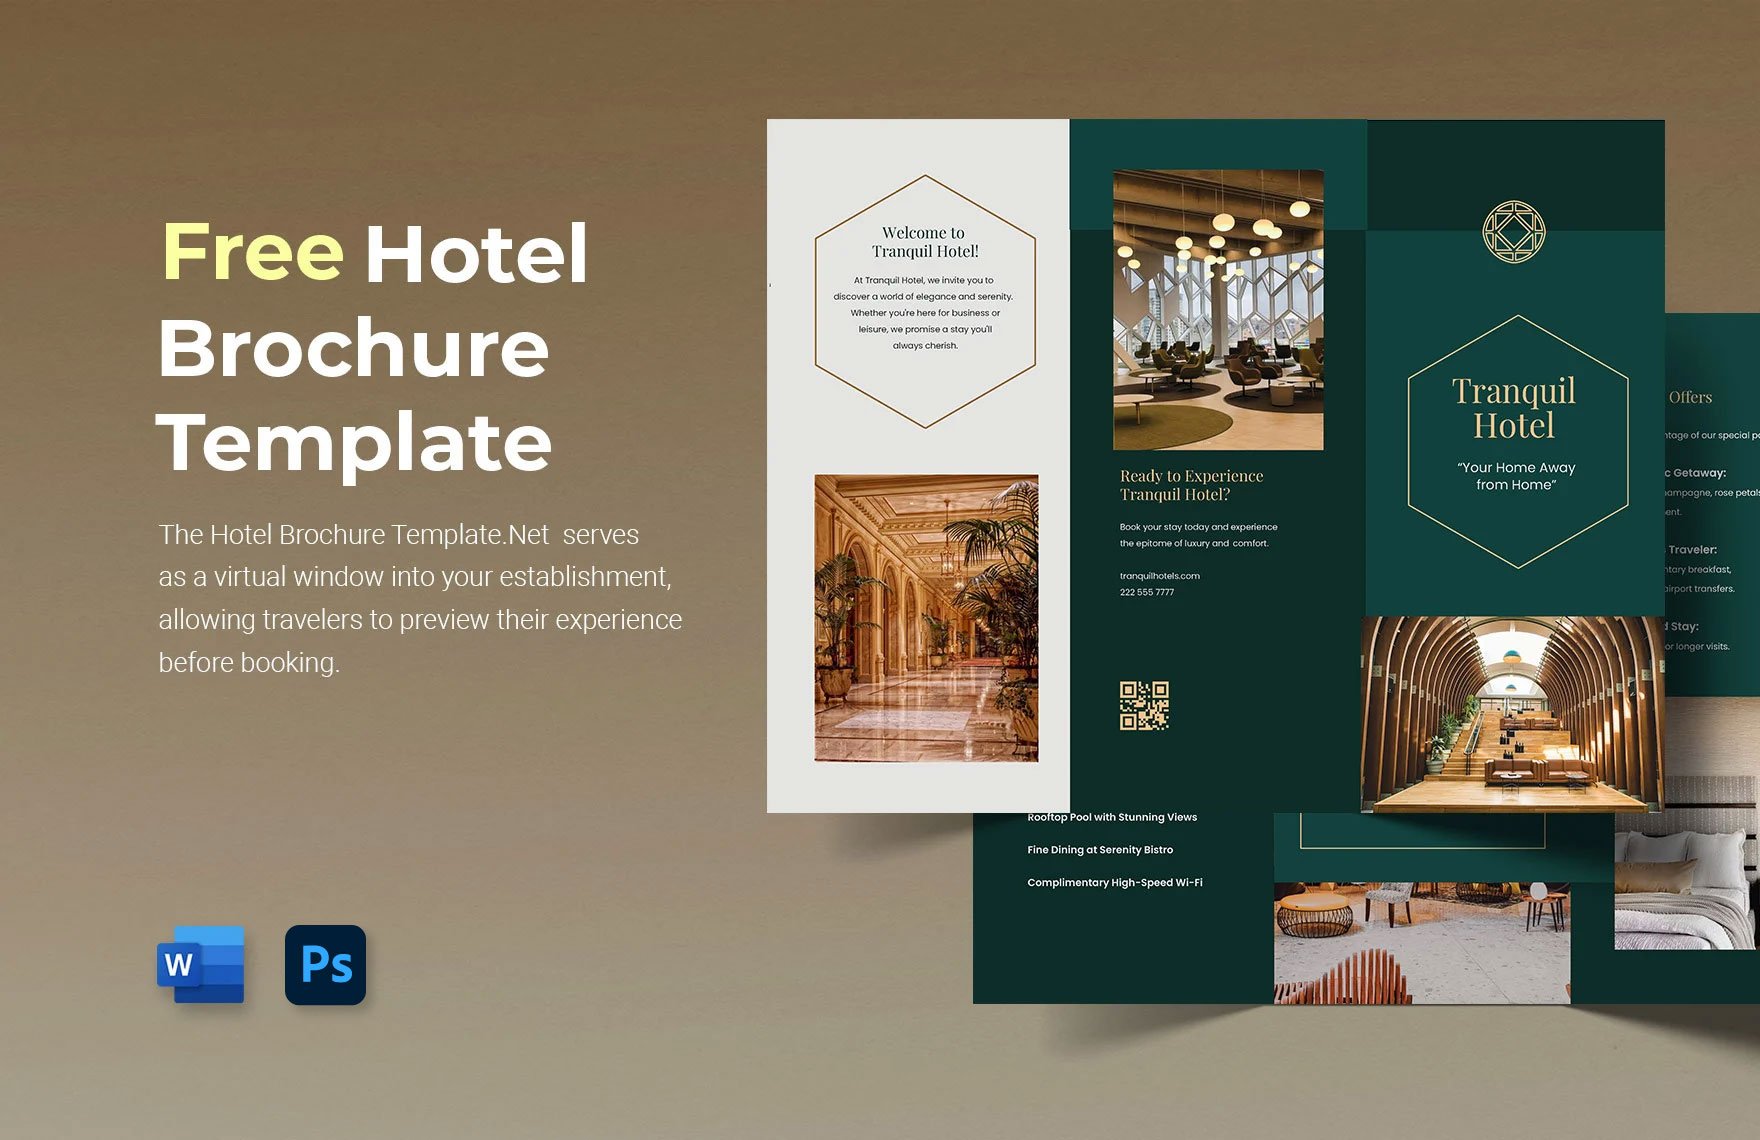 Free Hotel Brochure Template